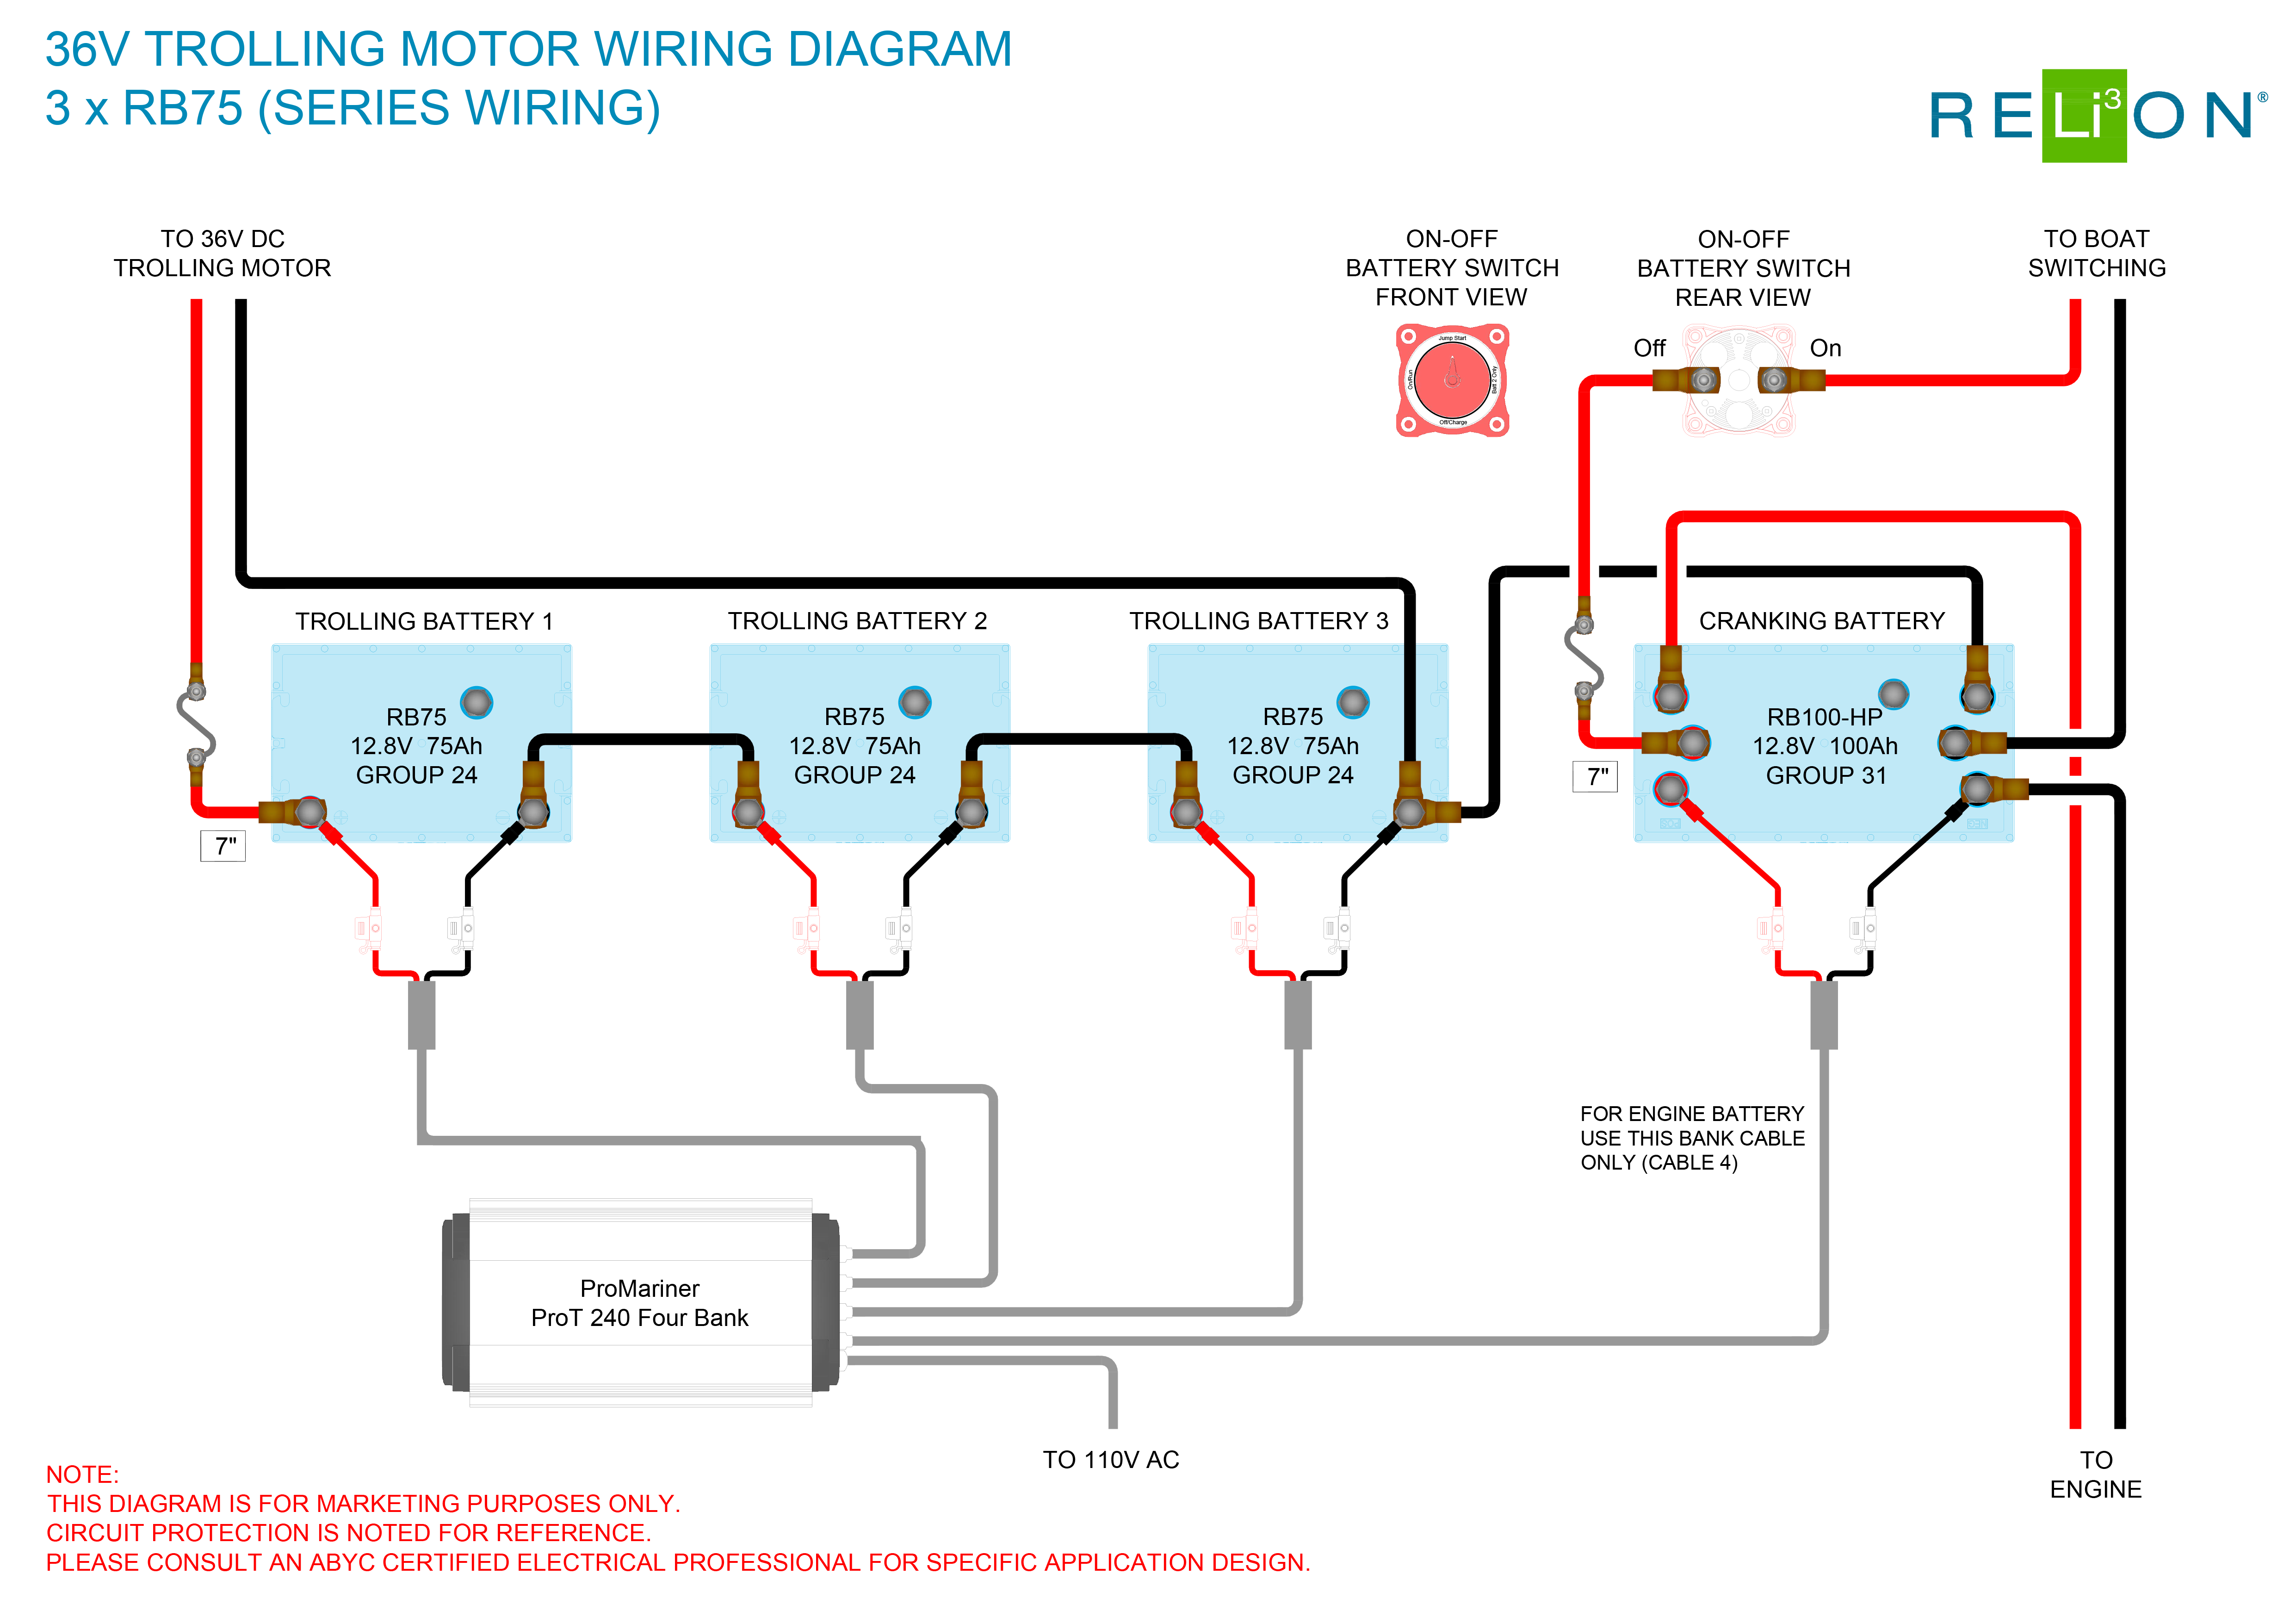 36V Trolling Motor Series Wiring Diagram